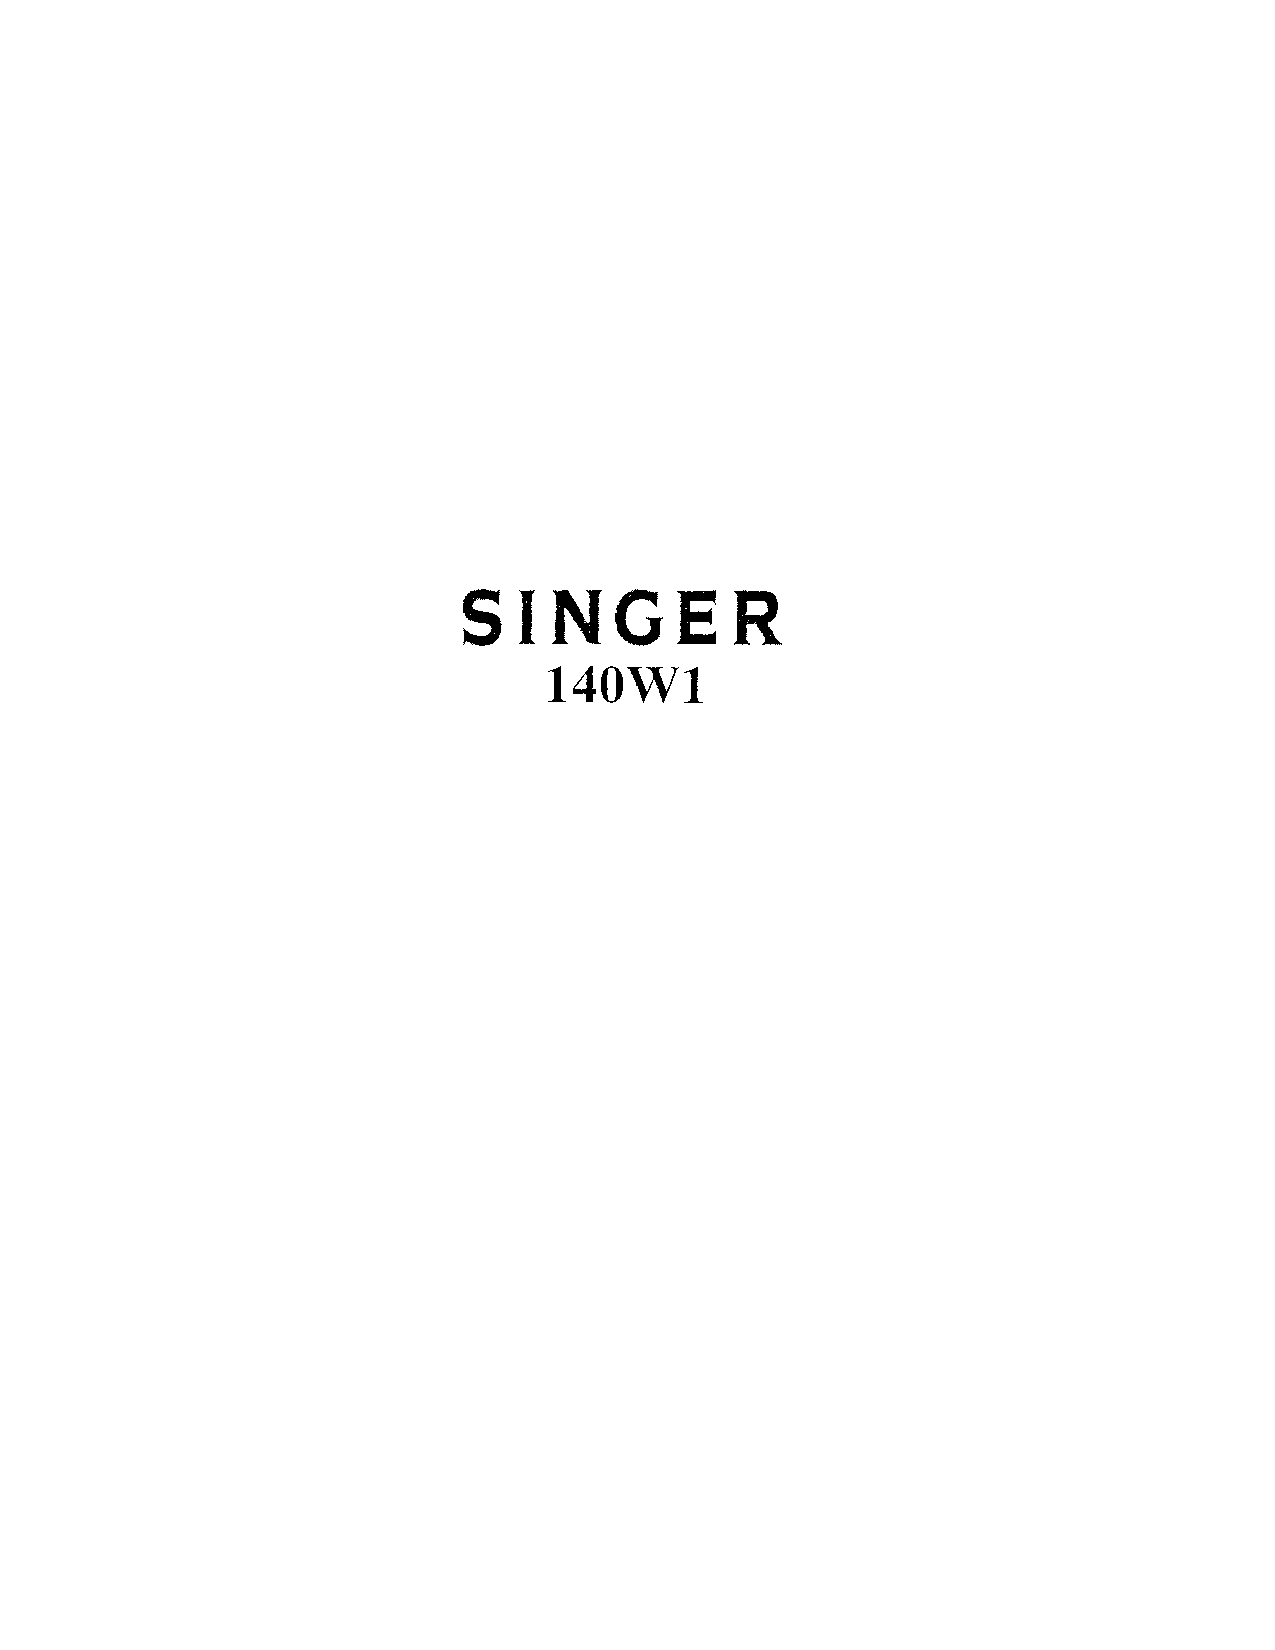 Singer 140W1 User Manual